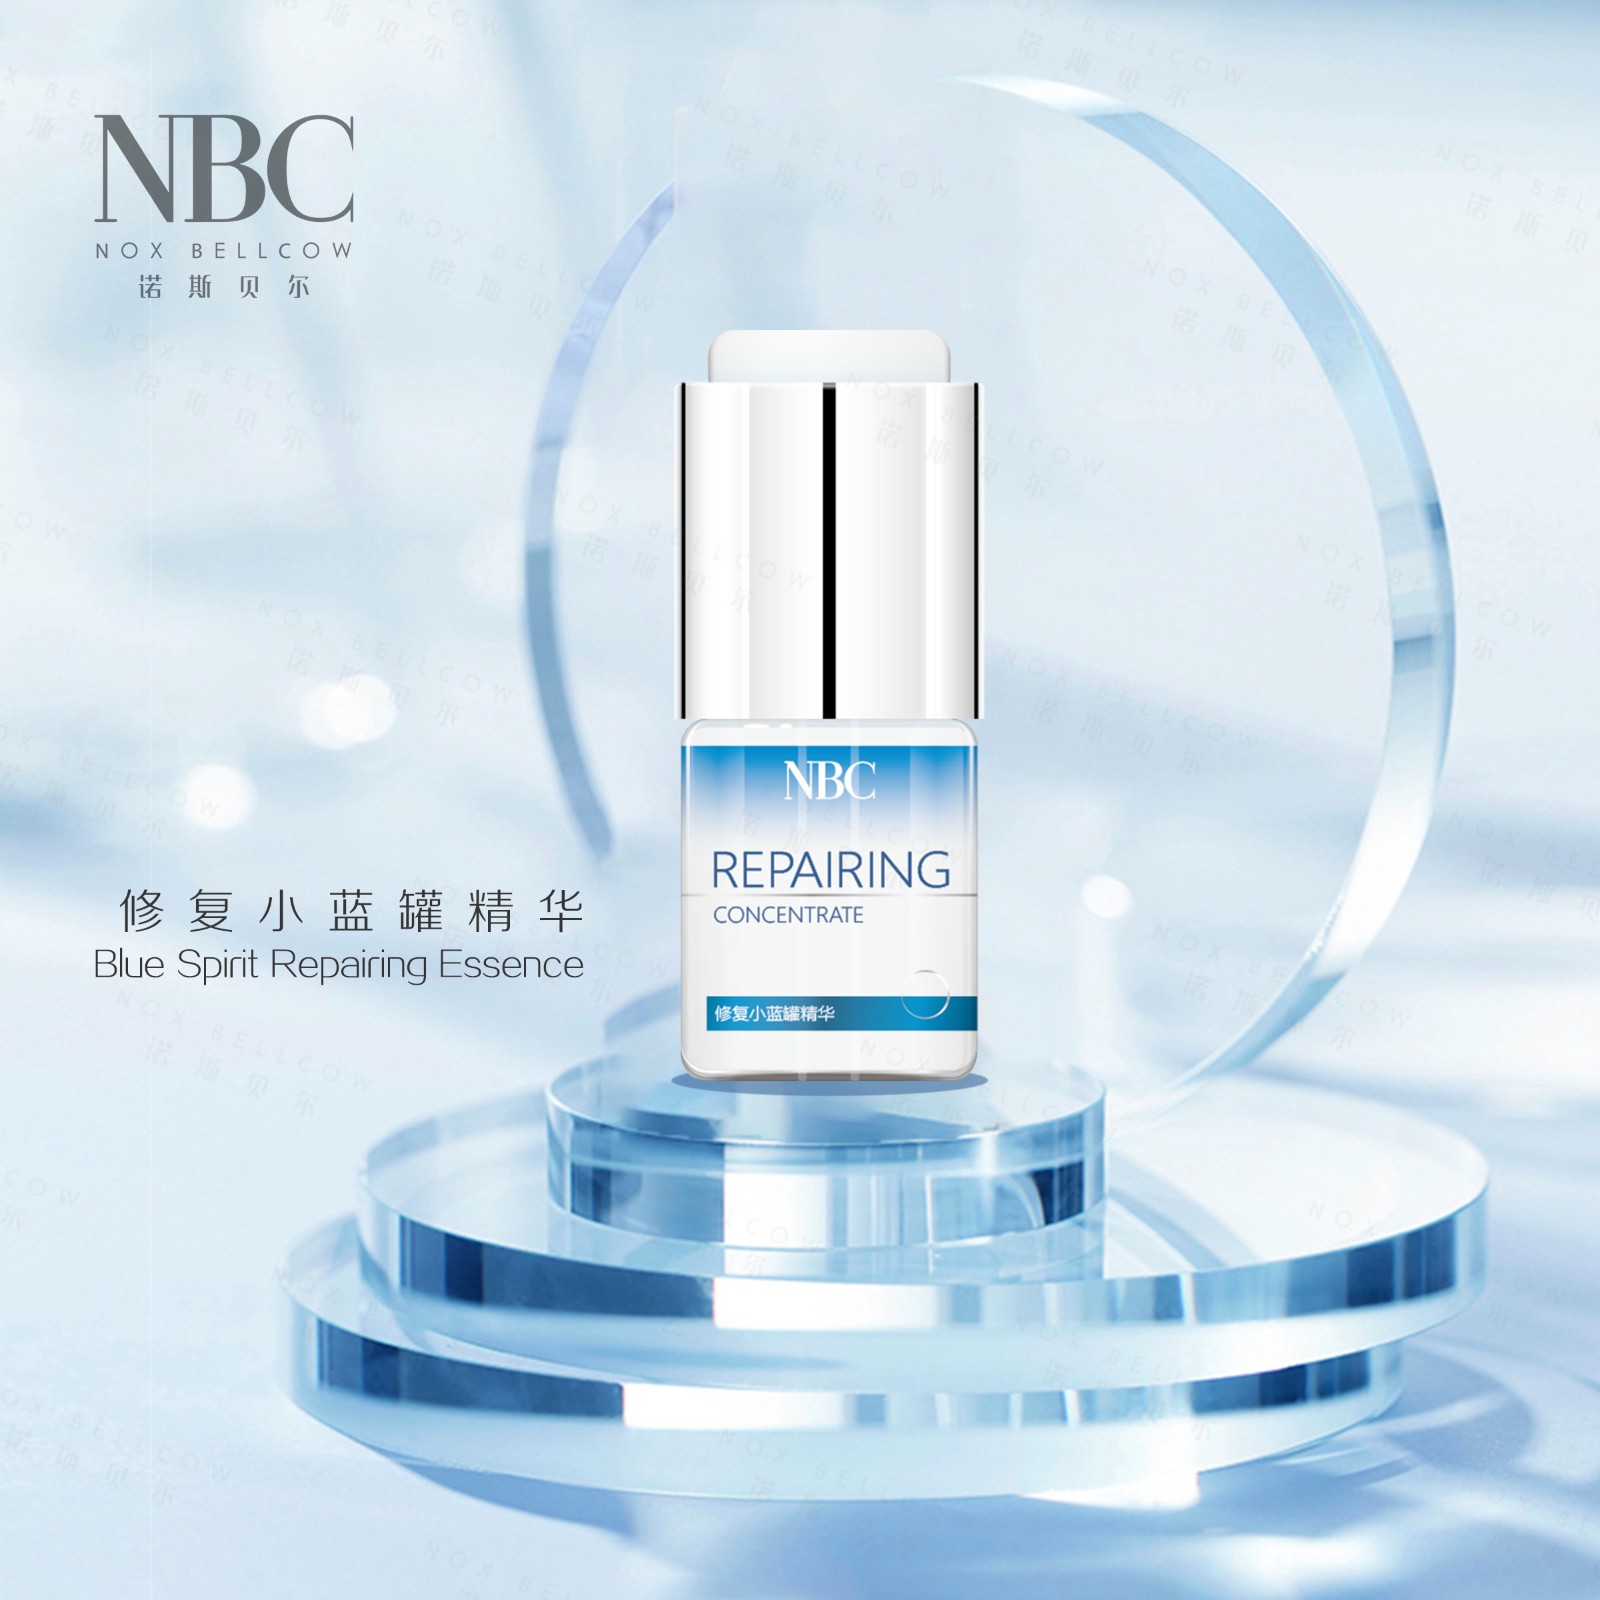 NOX BELLCOW essence skin care company for skincare-3